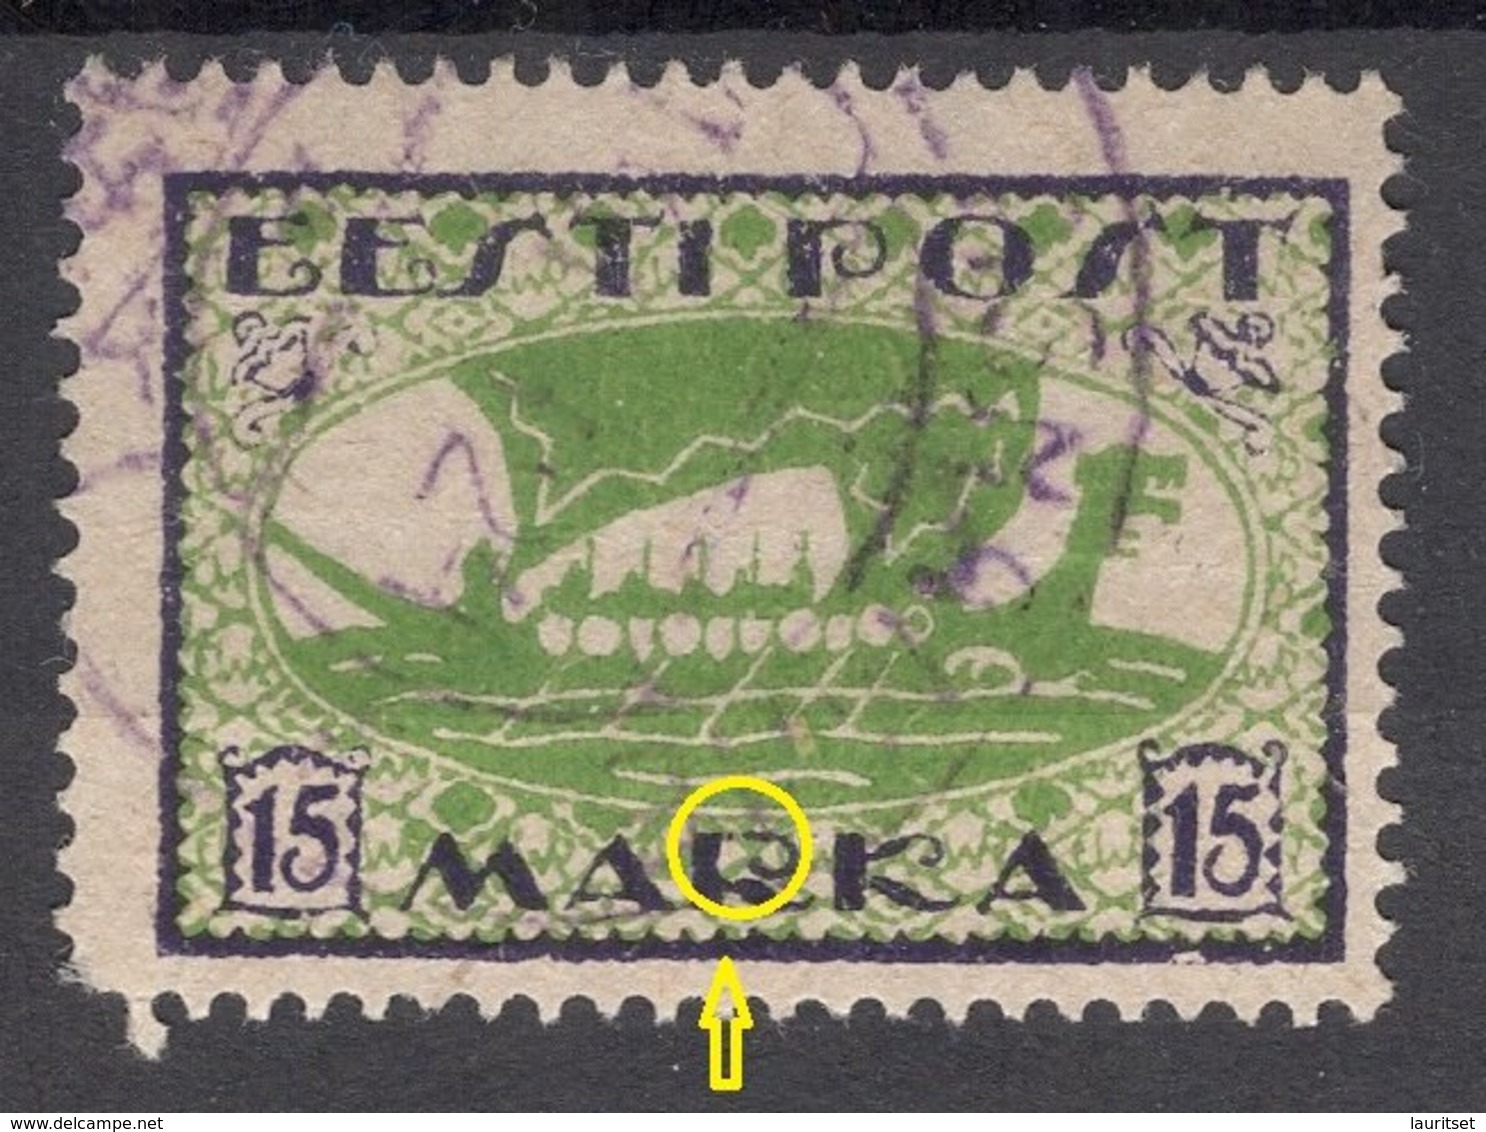 ESTLAND Estonia 1922 Michel 23 A ERROR Abart Variety Damaged "R" In Marka O Violet Cancel - Estonia